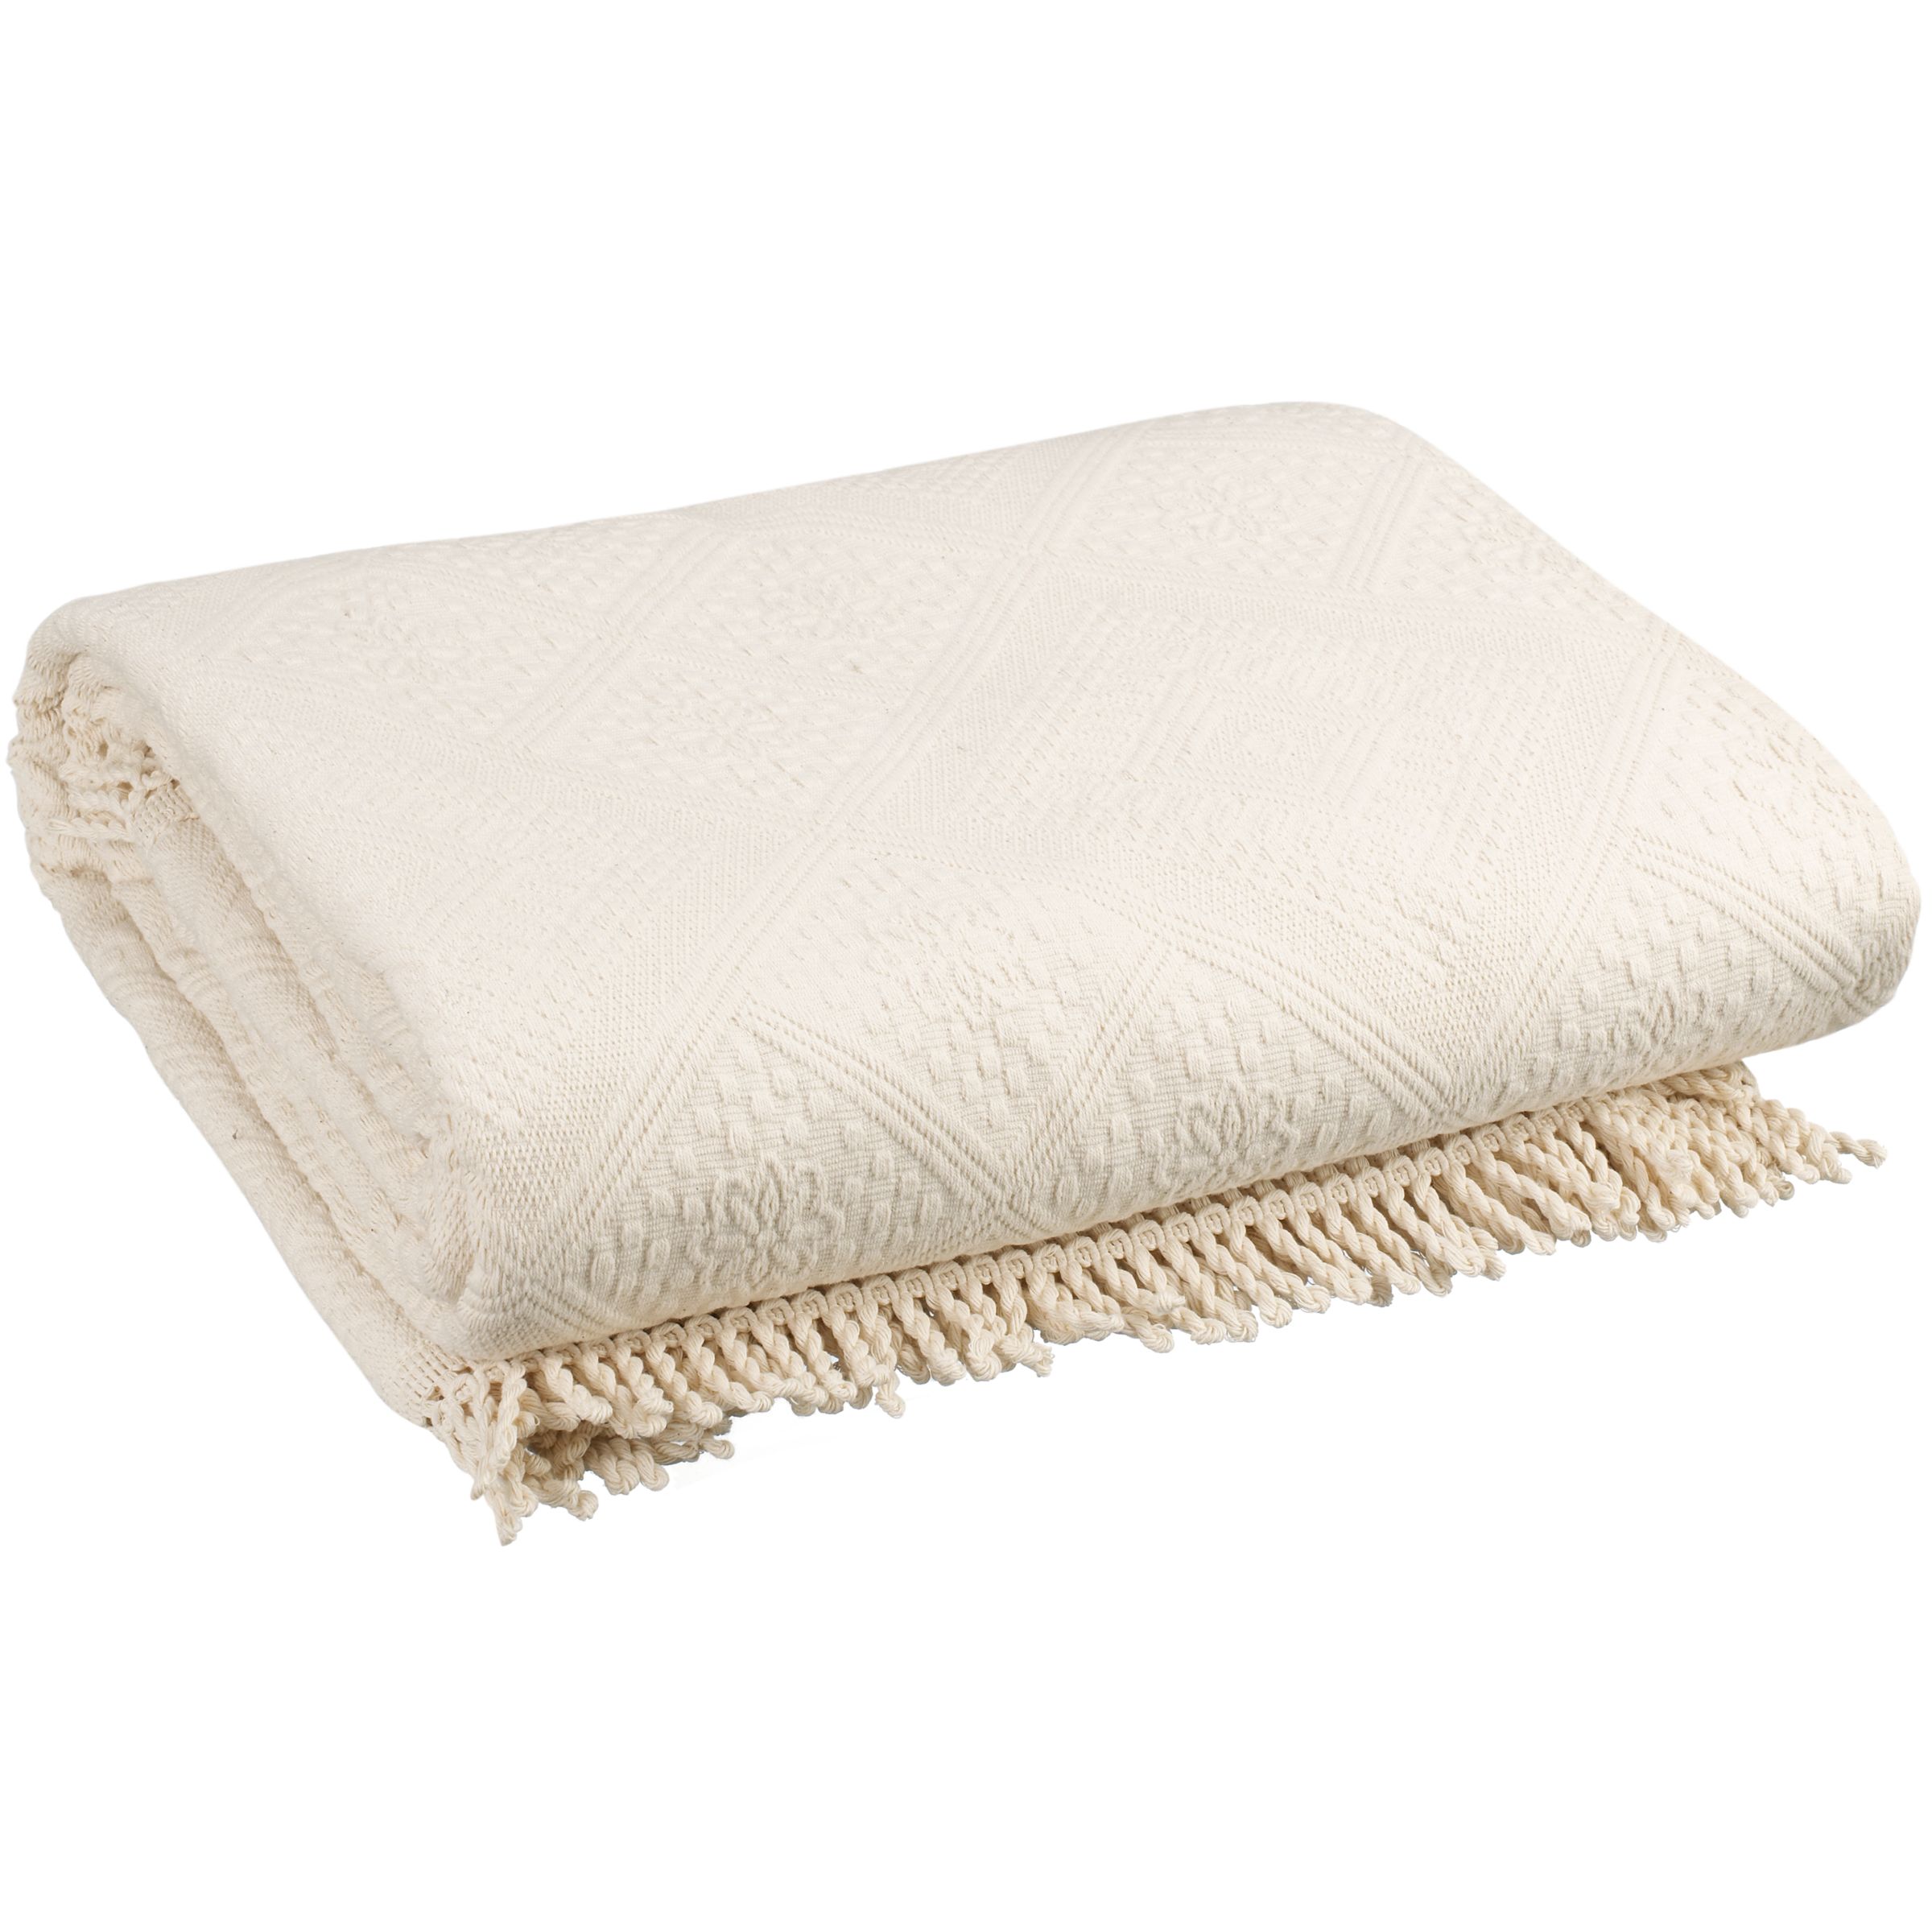 John Lewis City Cotton Bedspread, Ecru 119418